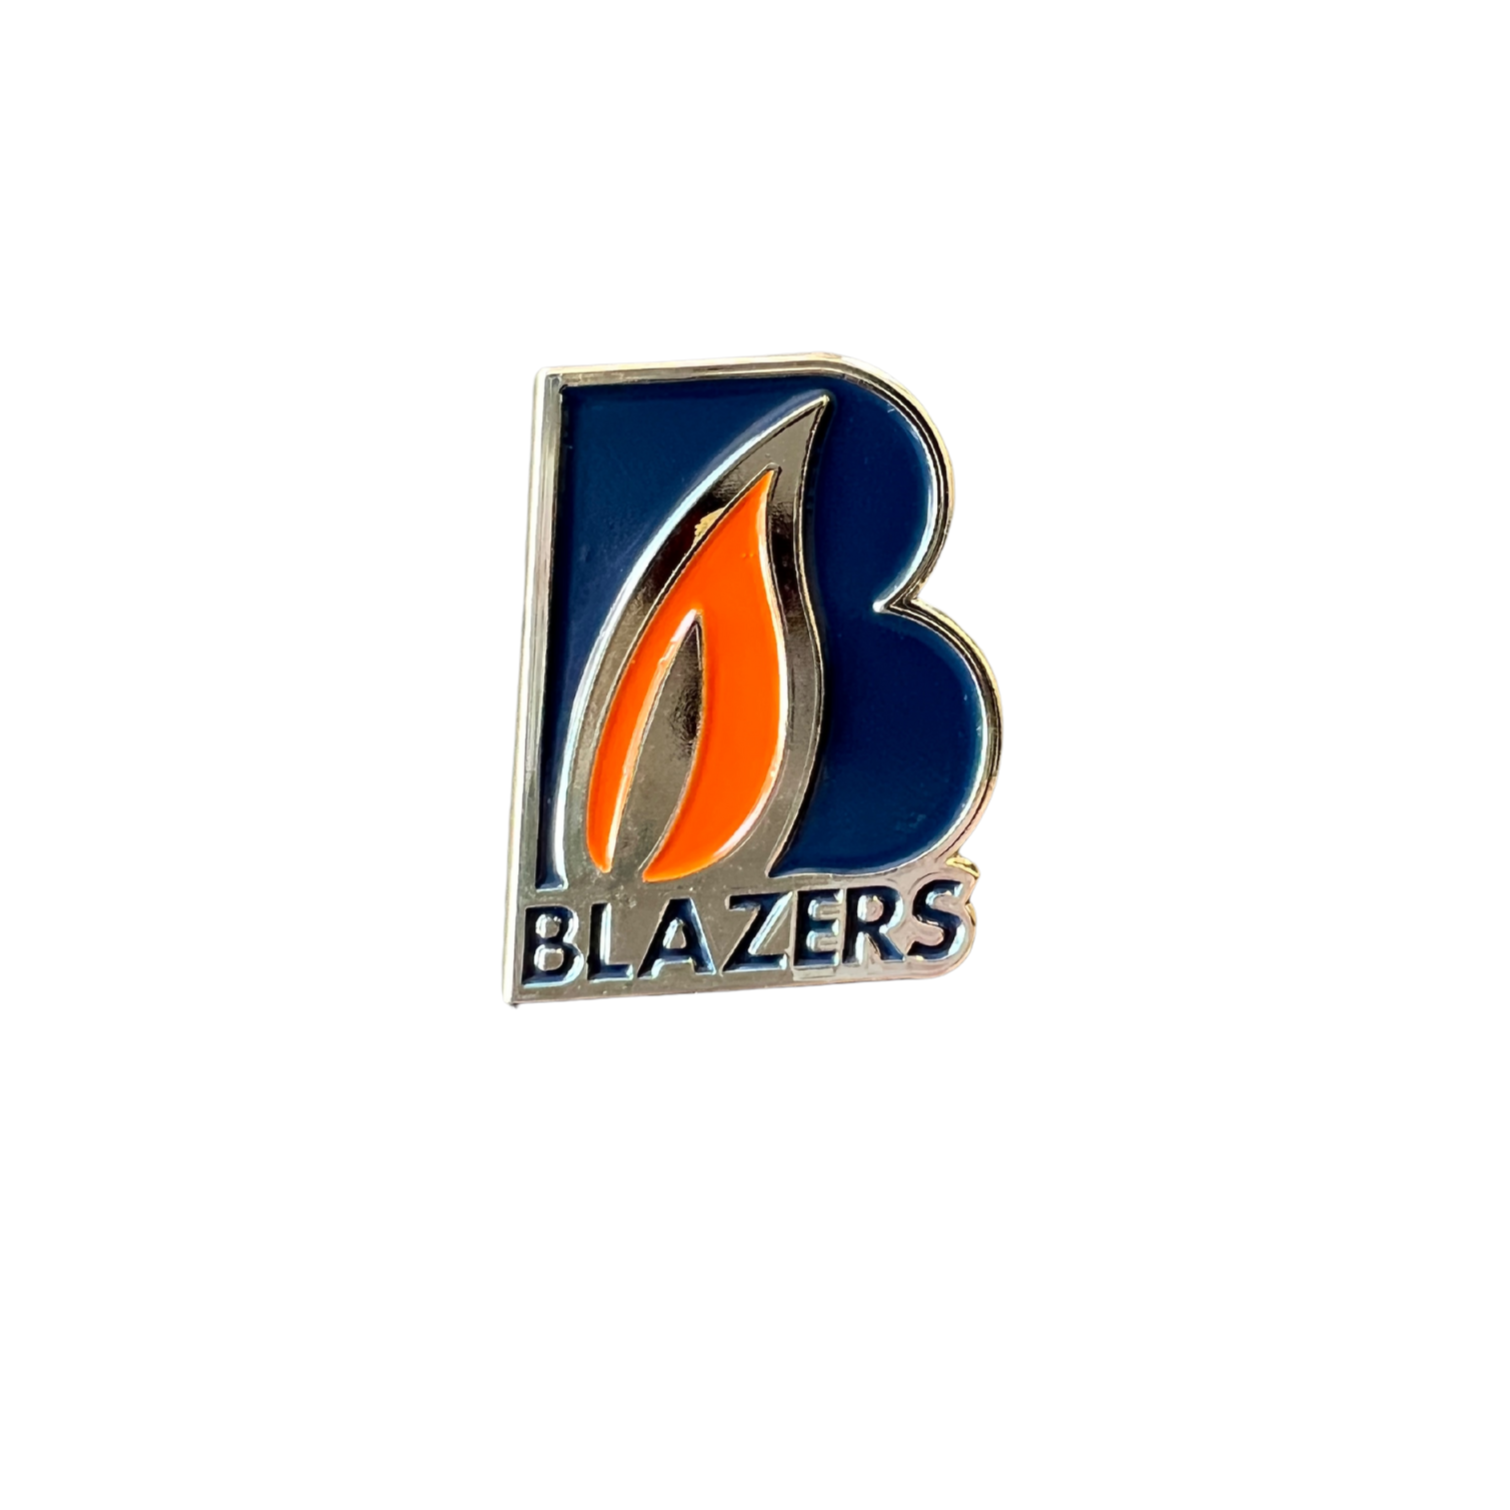 Blazers 'B' Pin